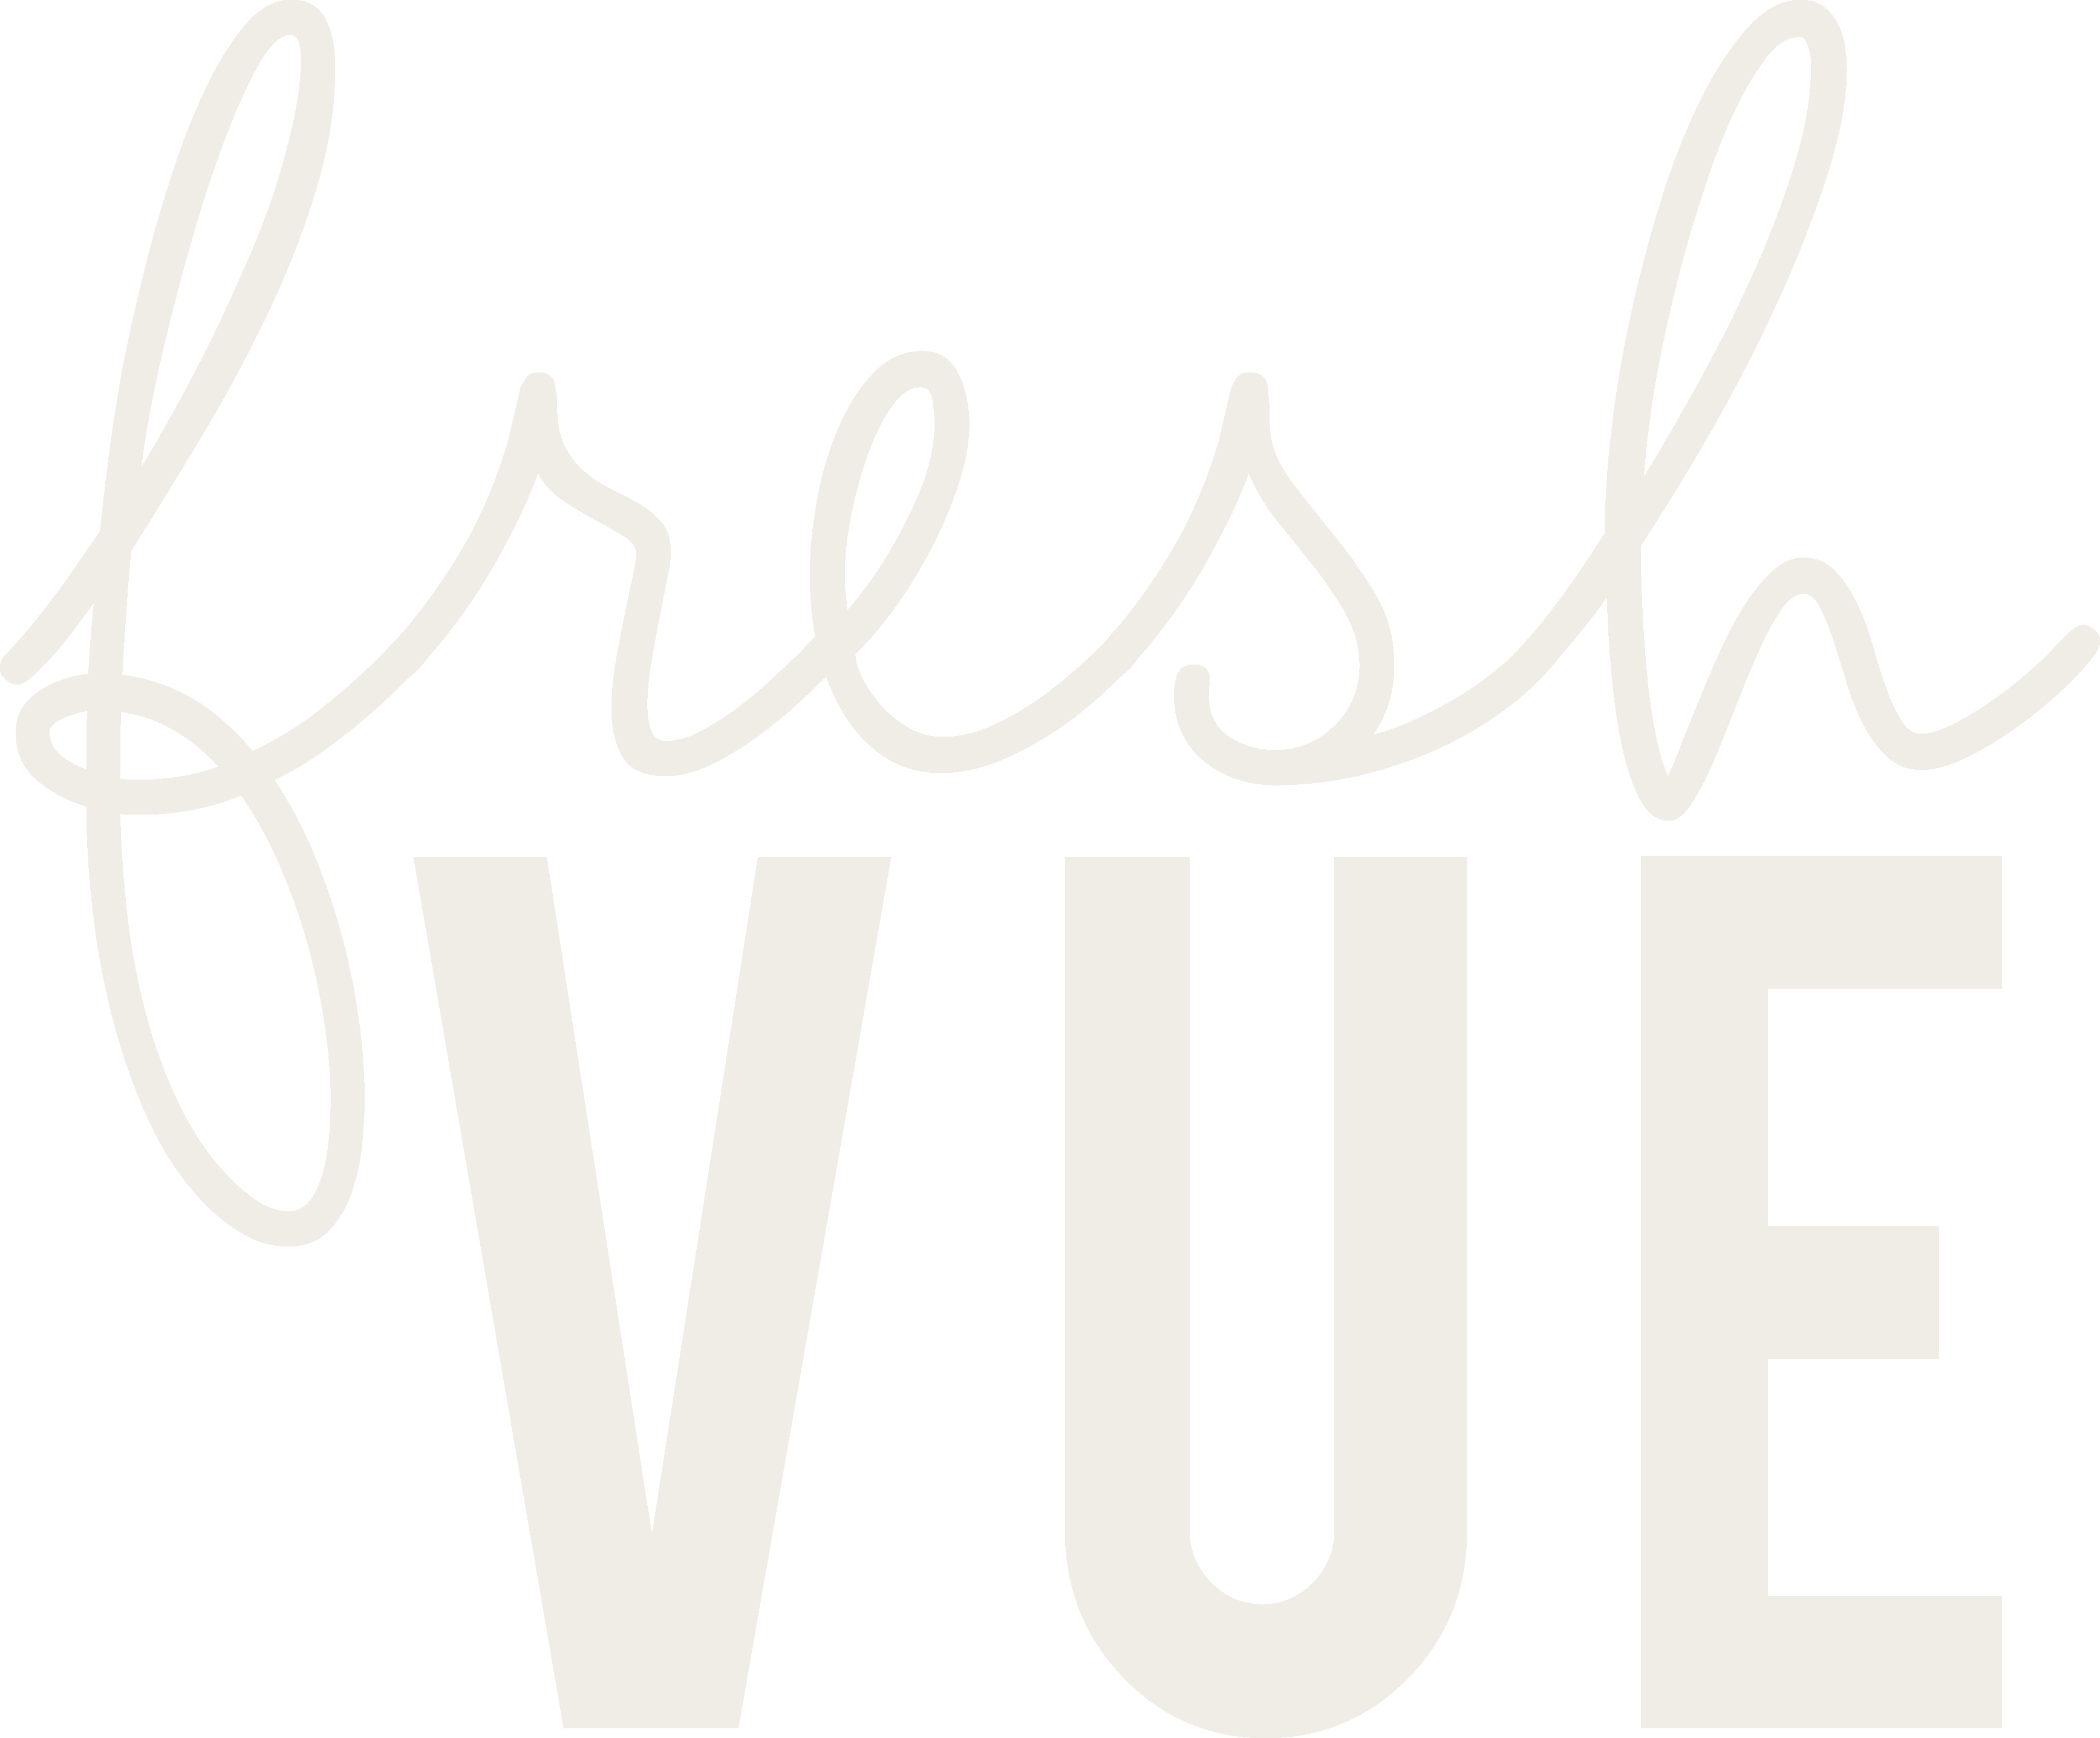 509 Logo - FreshVue, Informed, Executive Consultants